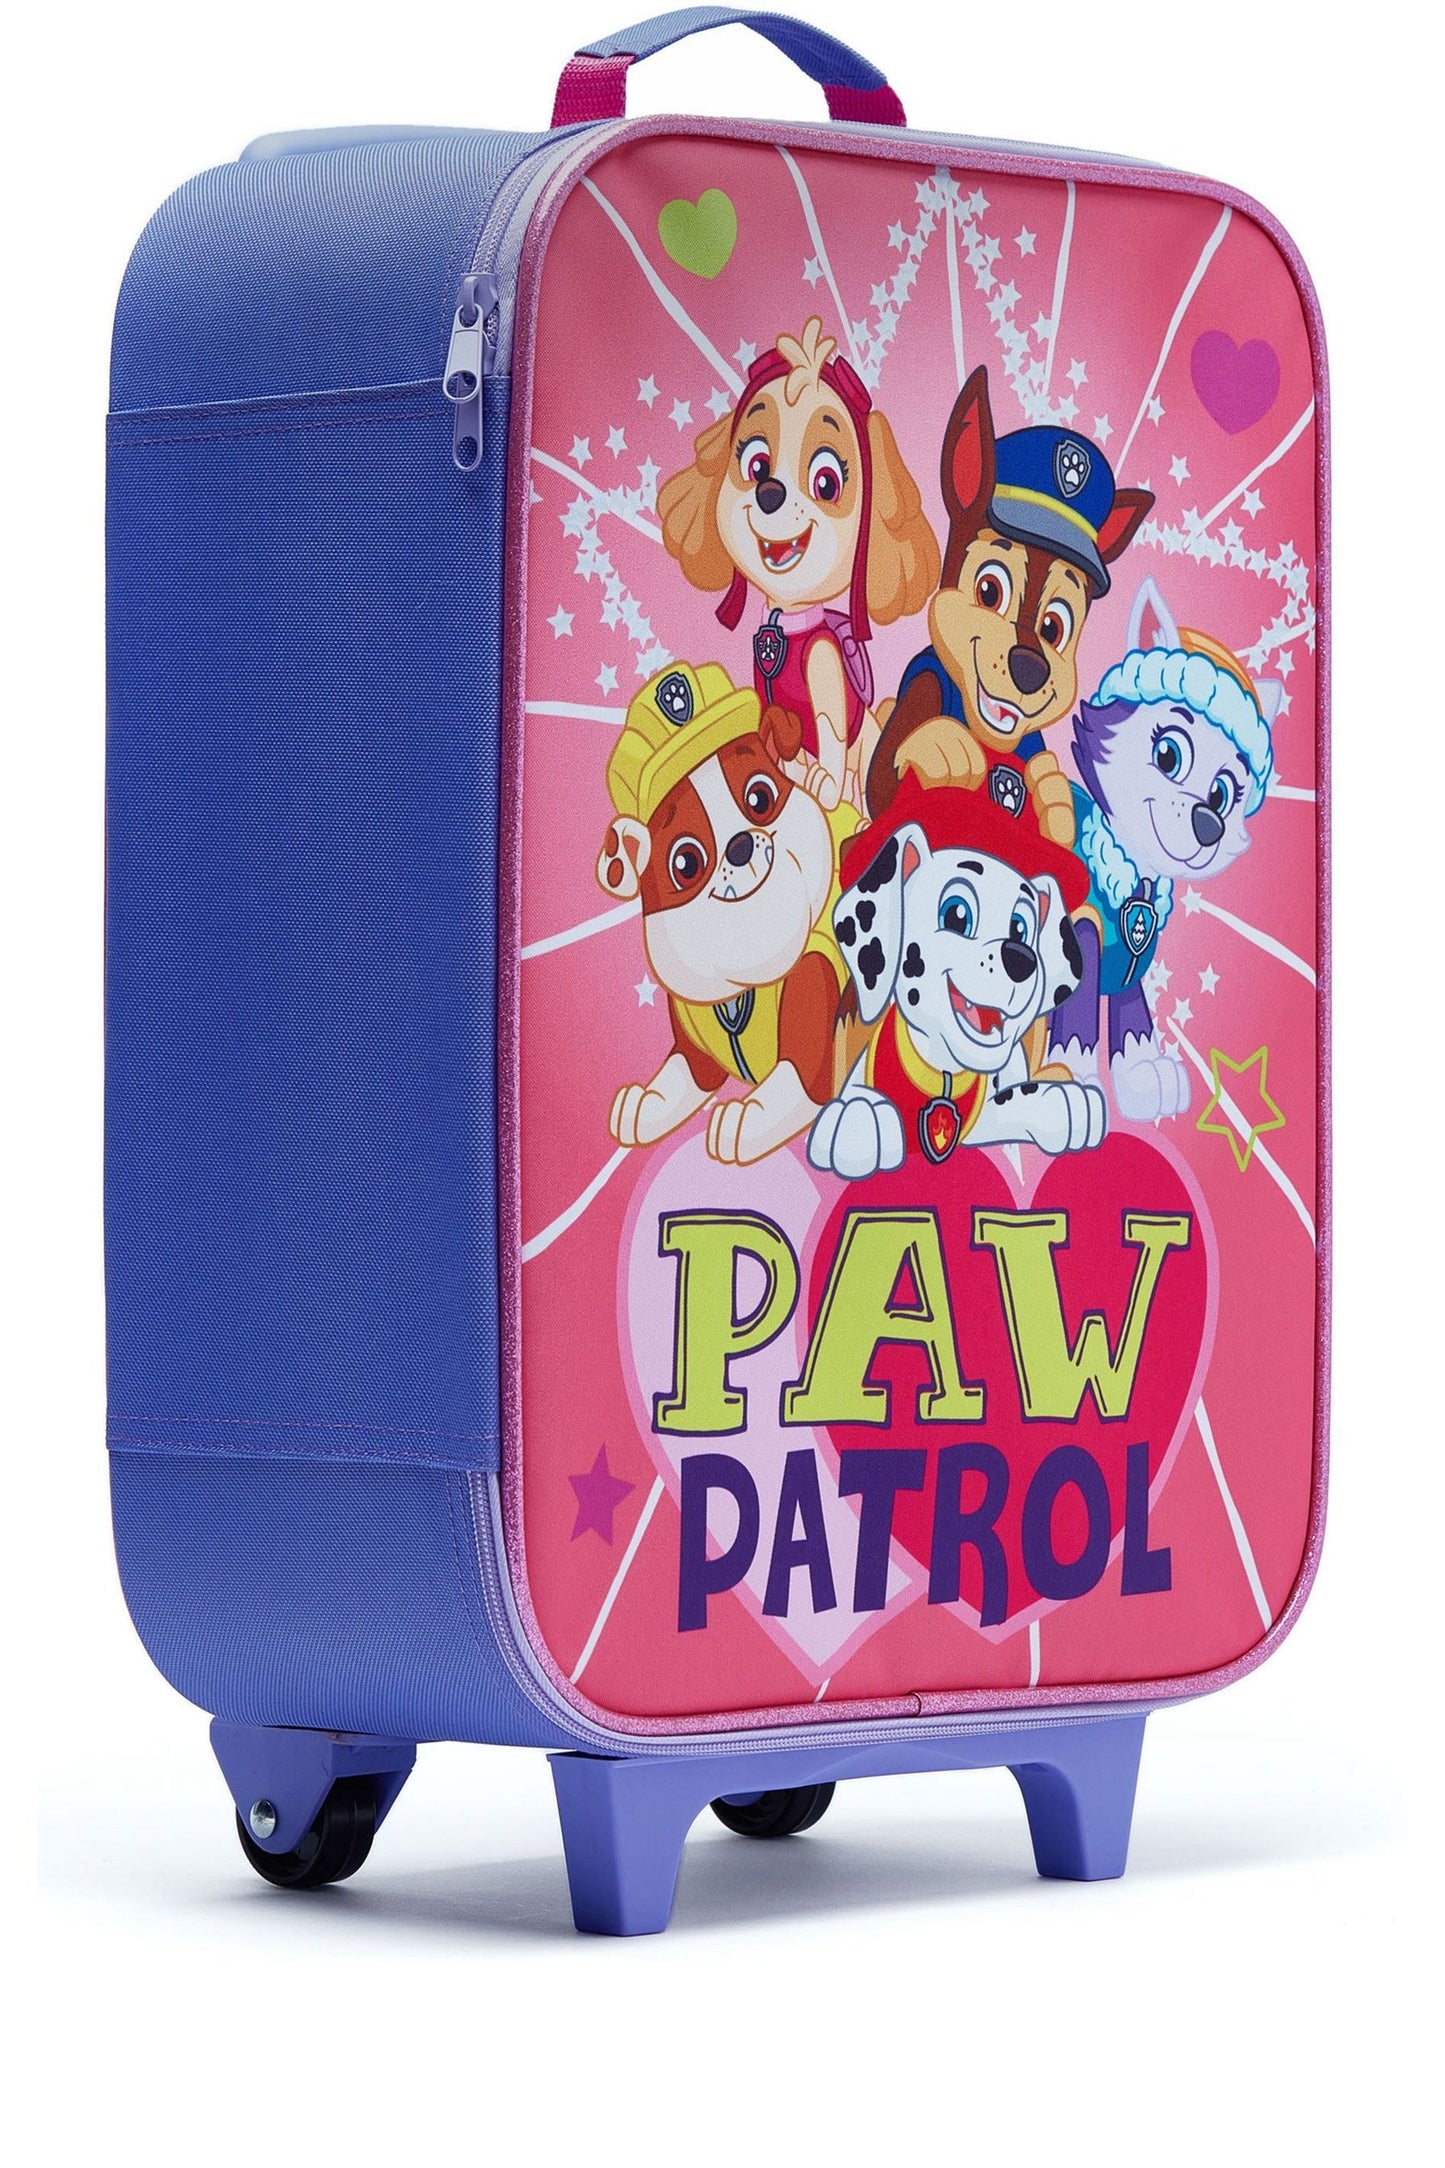 Paw Patrol Rolling Luggage - Marshall & Chase